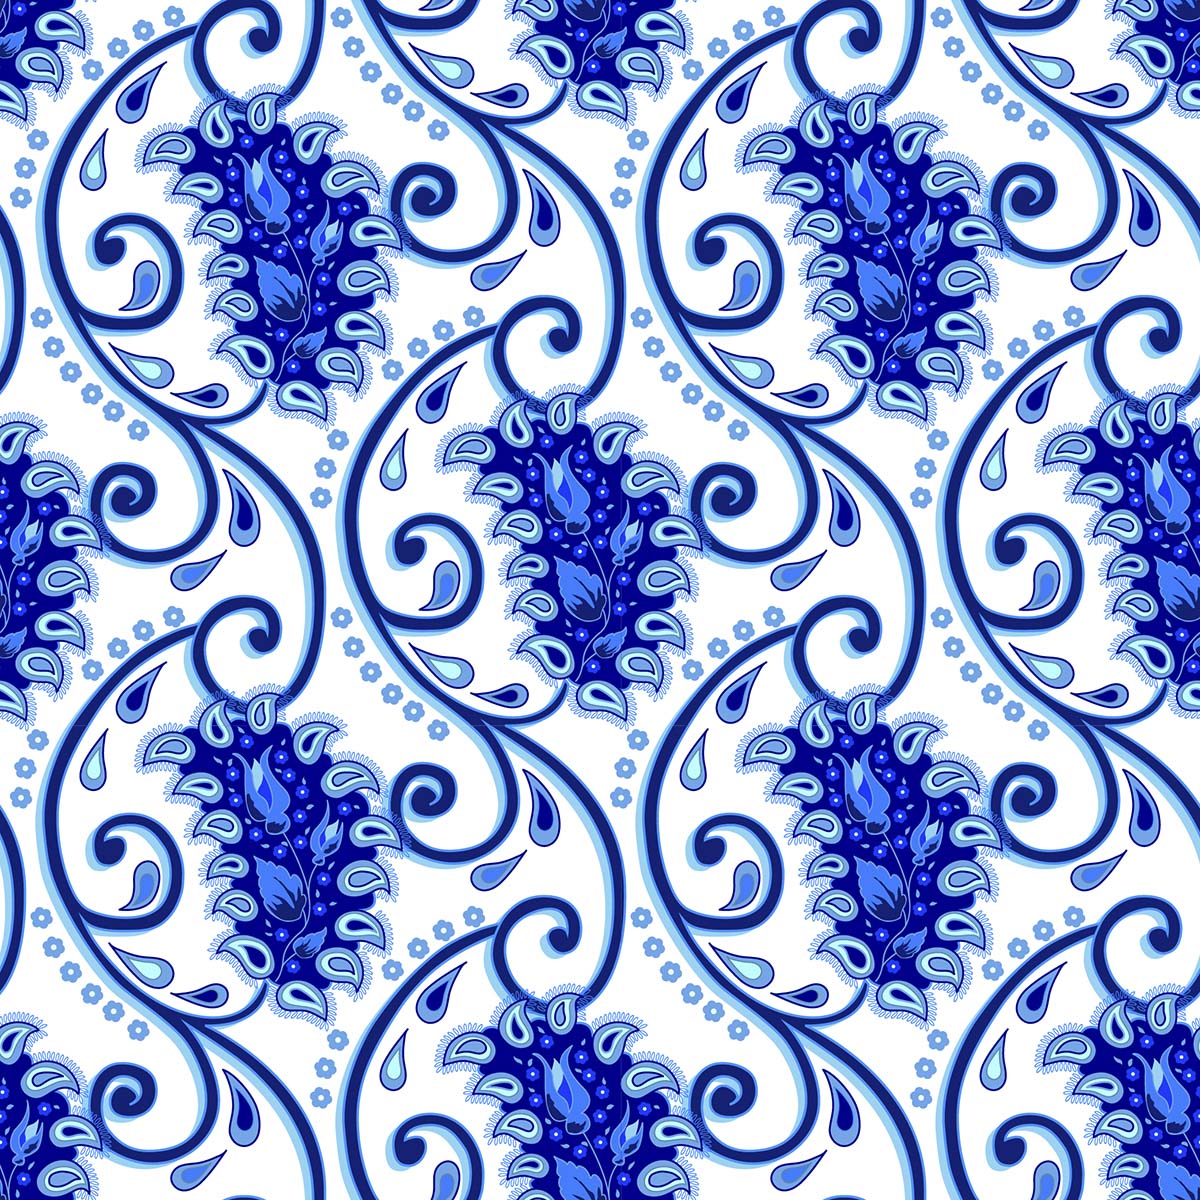 A pattern of blue and white swirls